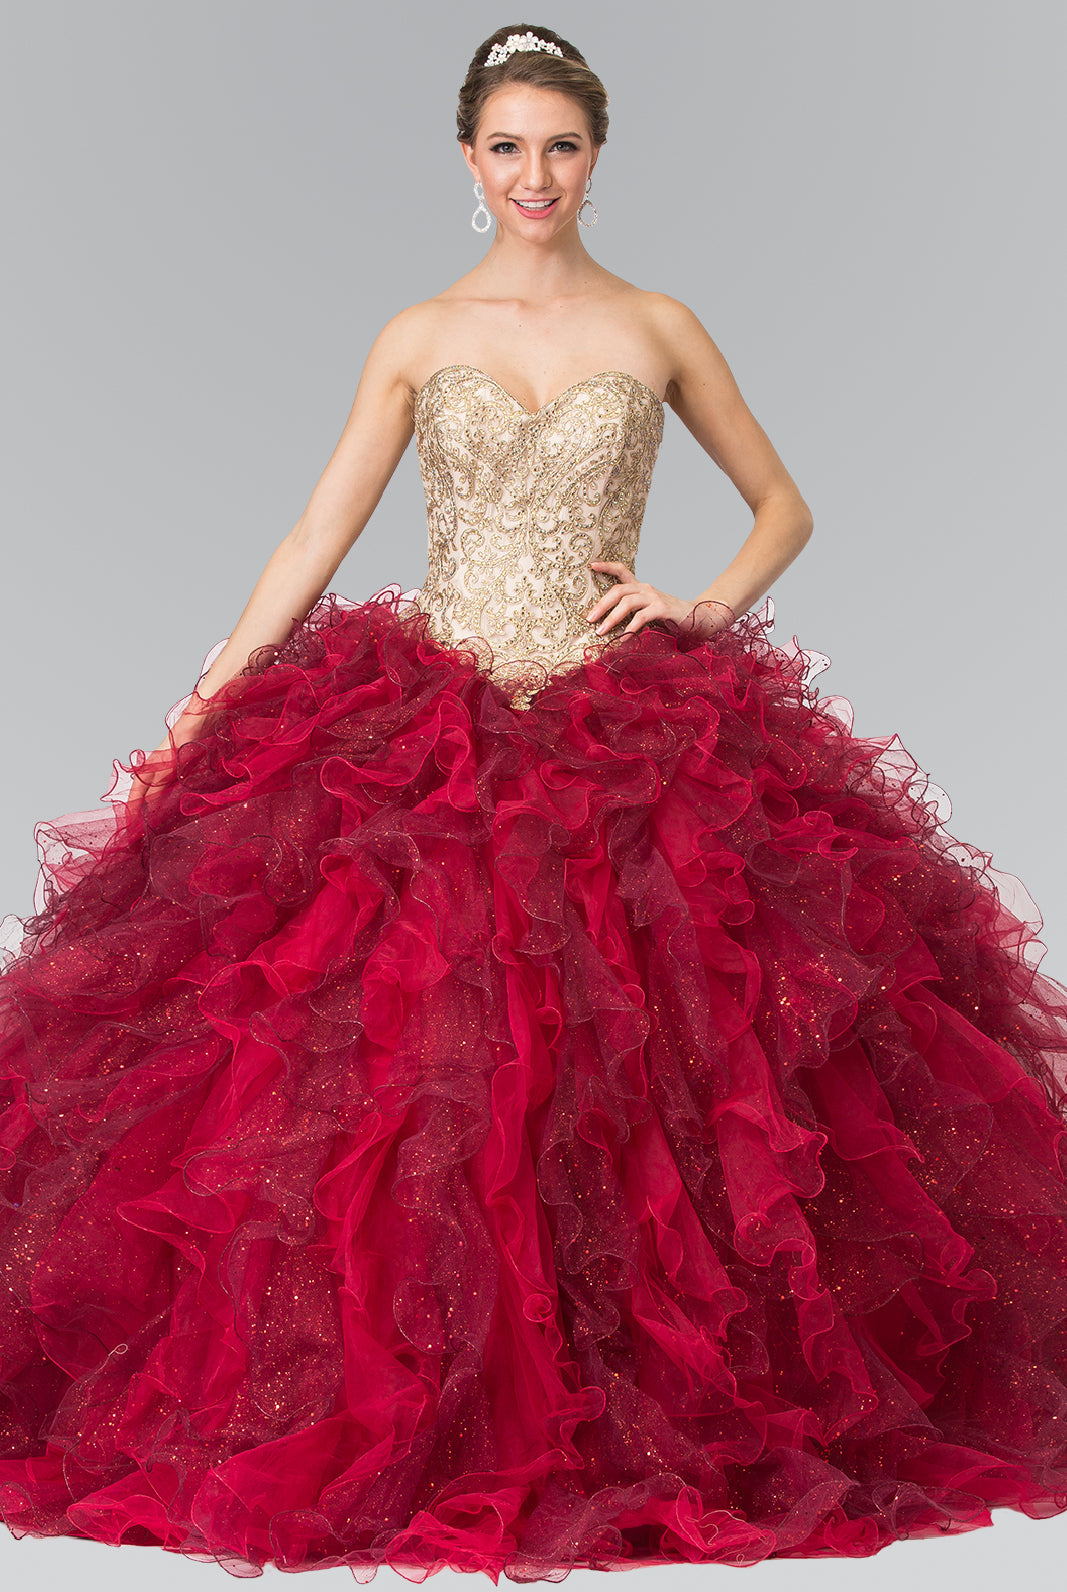 Tulle Ruffled Quinceanera Dress with Bolero-smcdress